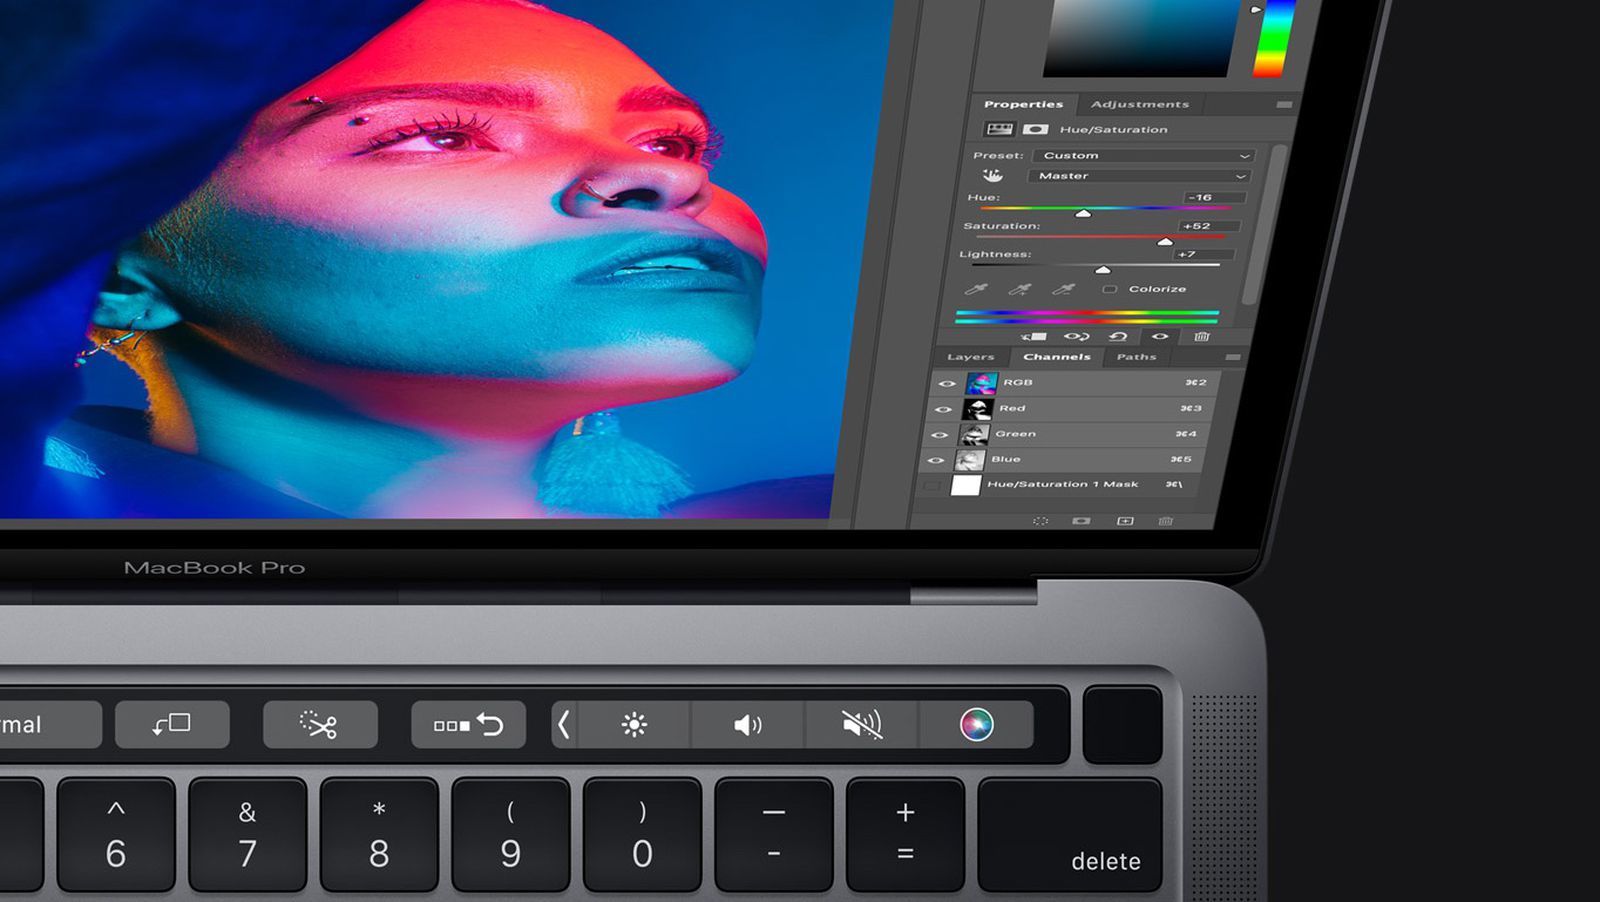 Loạt MacBook Pro, iPad sắp thành 'đồ cổ'